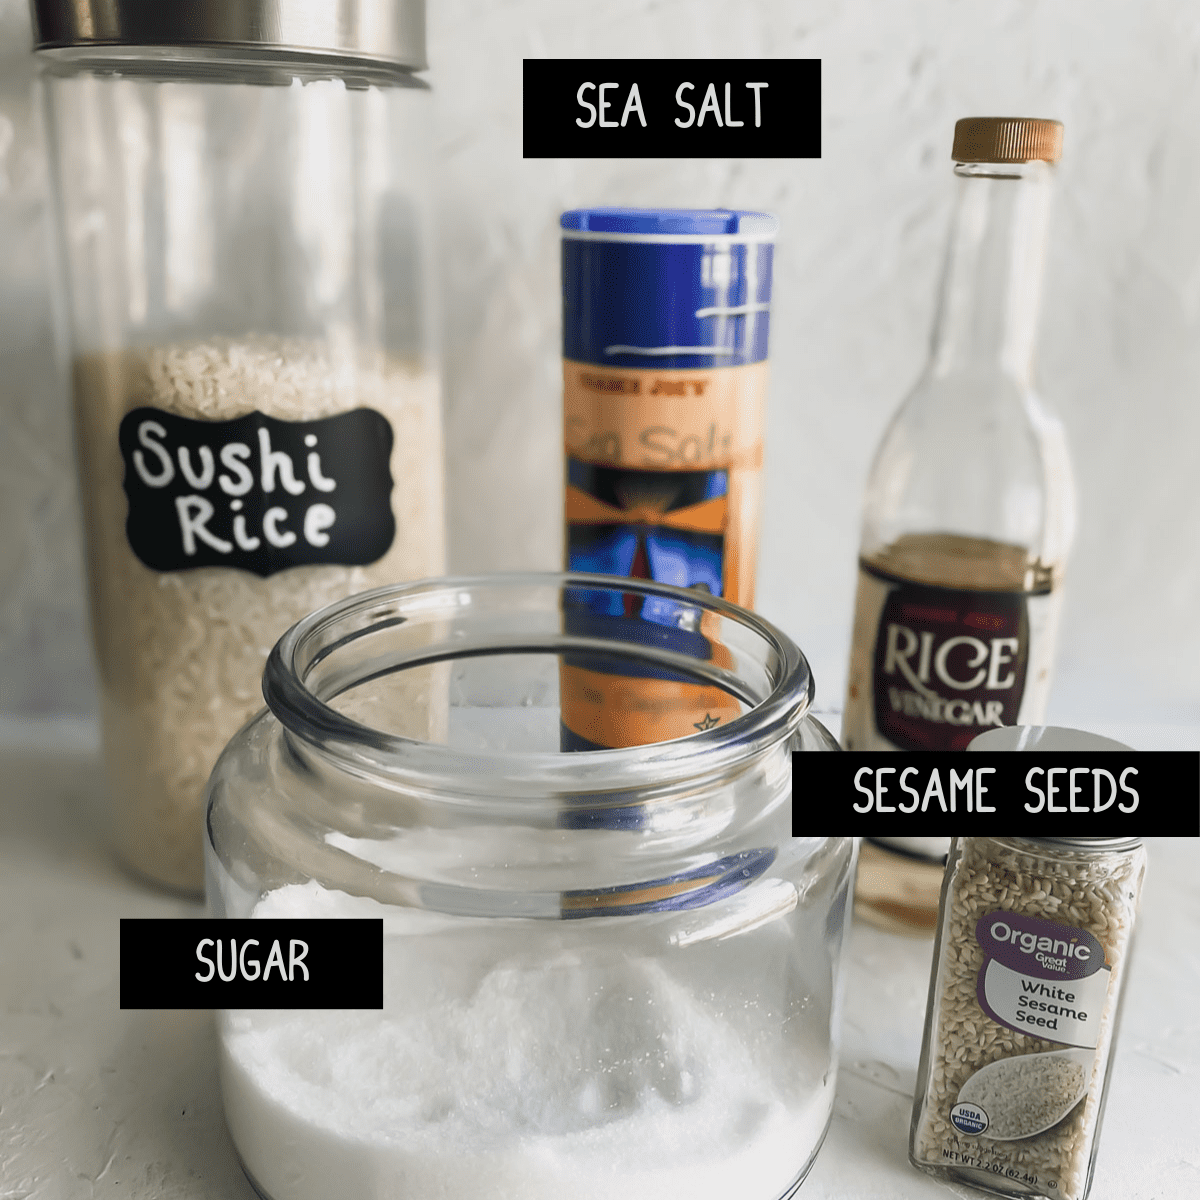 Ingredients for sushi rice